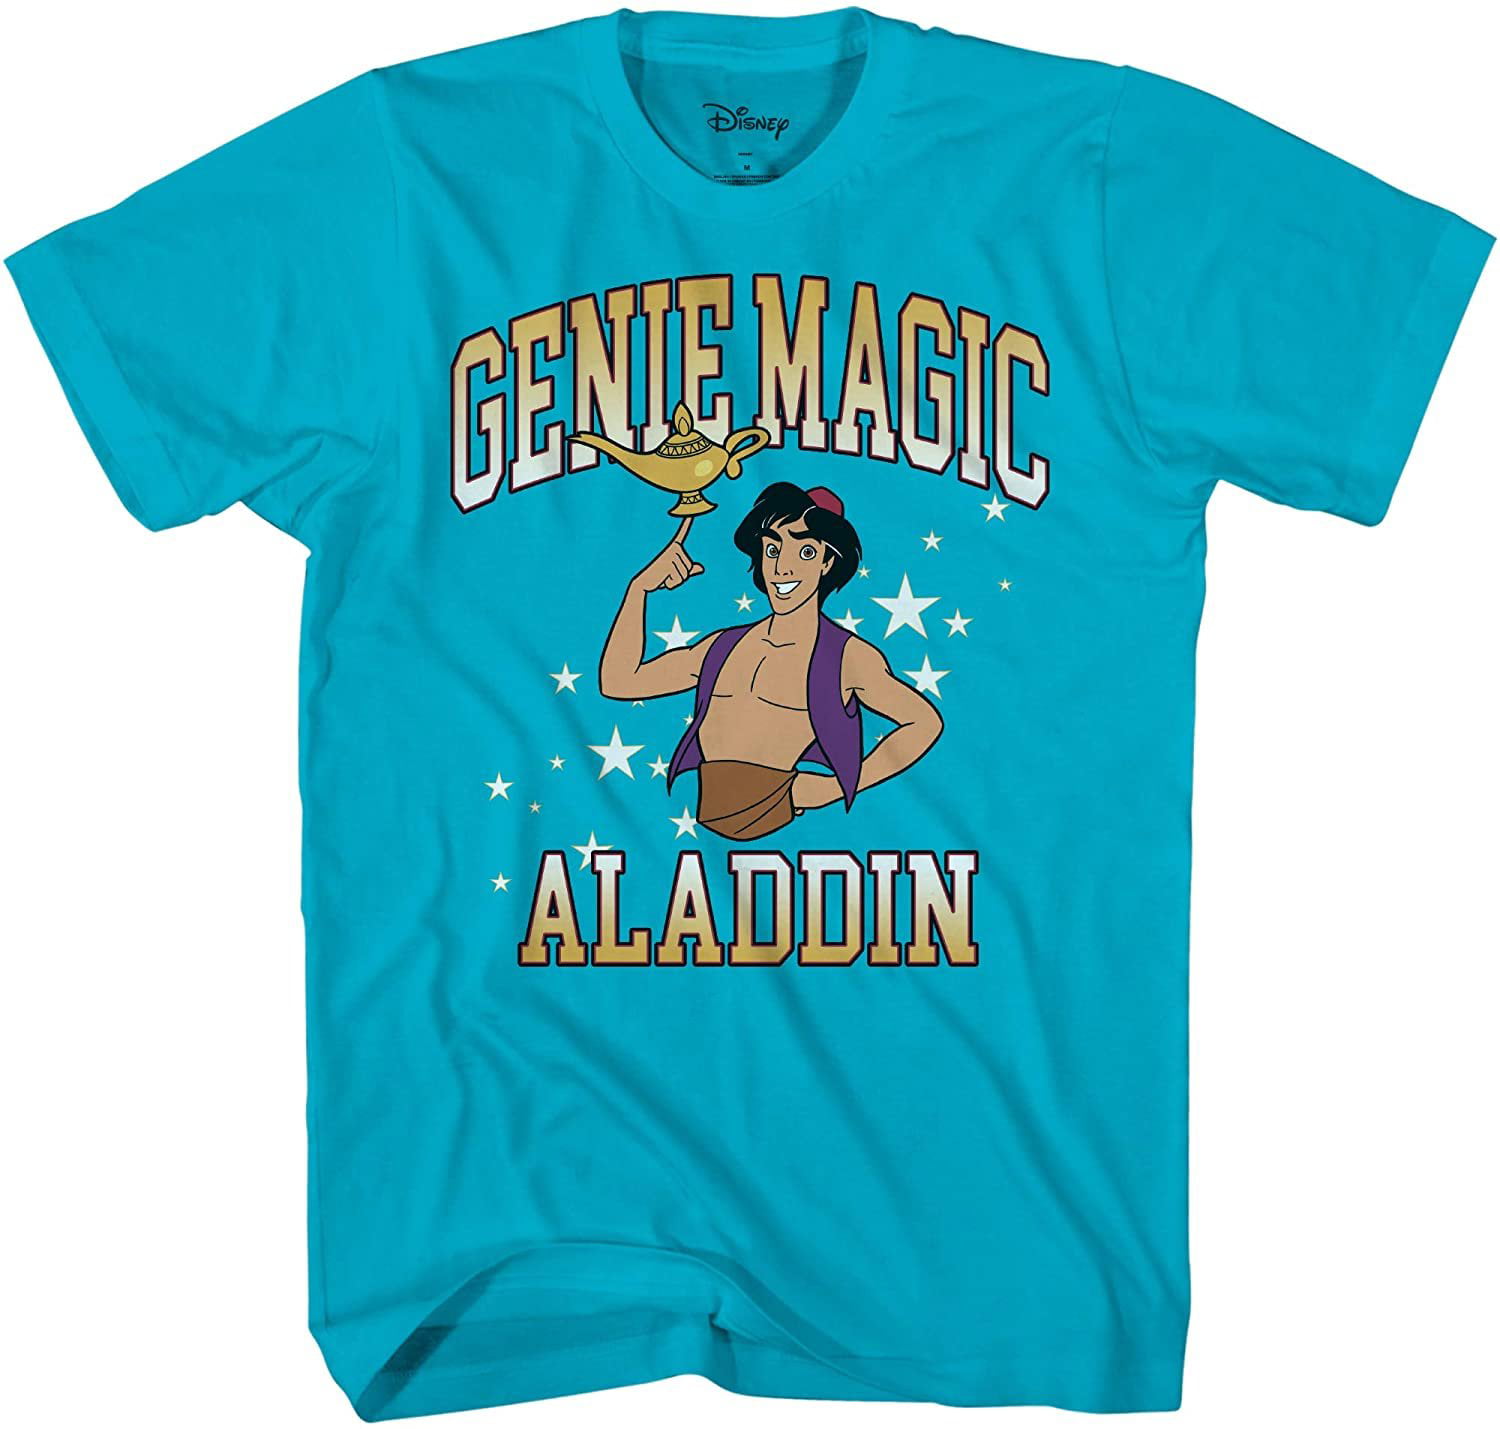 Disney Mens Classic Aladdin Shirt - Aladdin, Princess Jasmine, and Genie Tee  Shirt - Aladdin Graphic T-Shirt Turquiose, X-Large